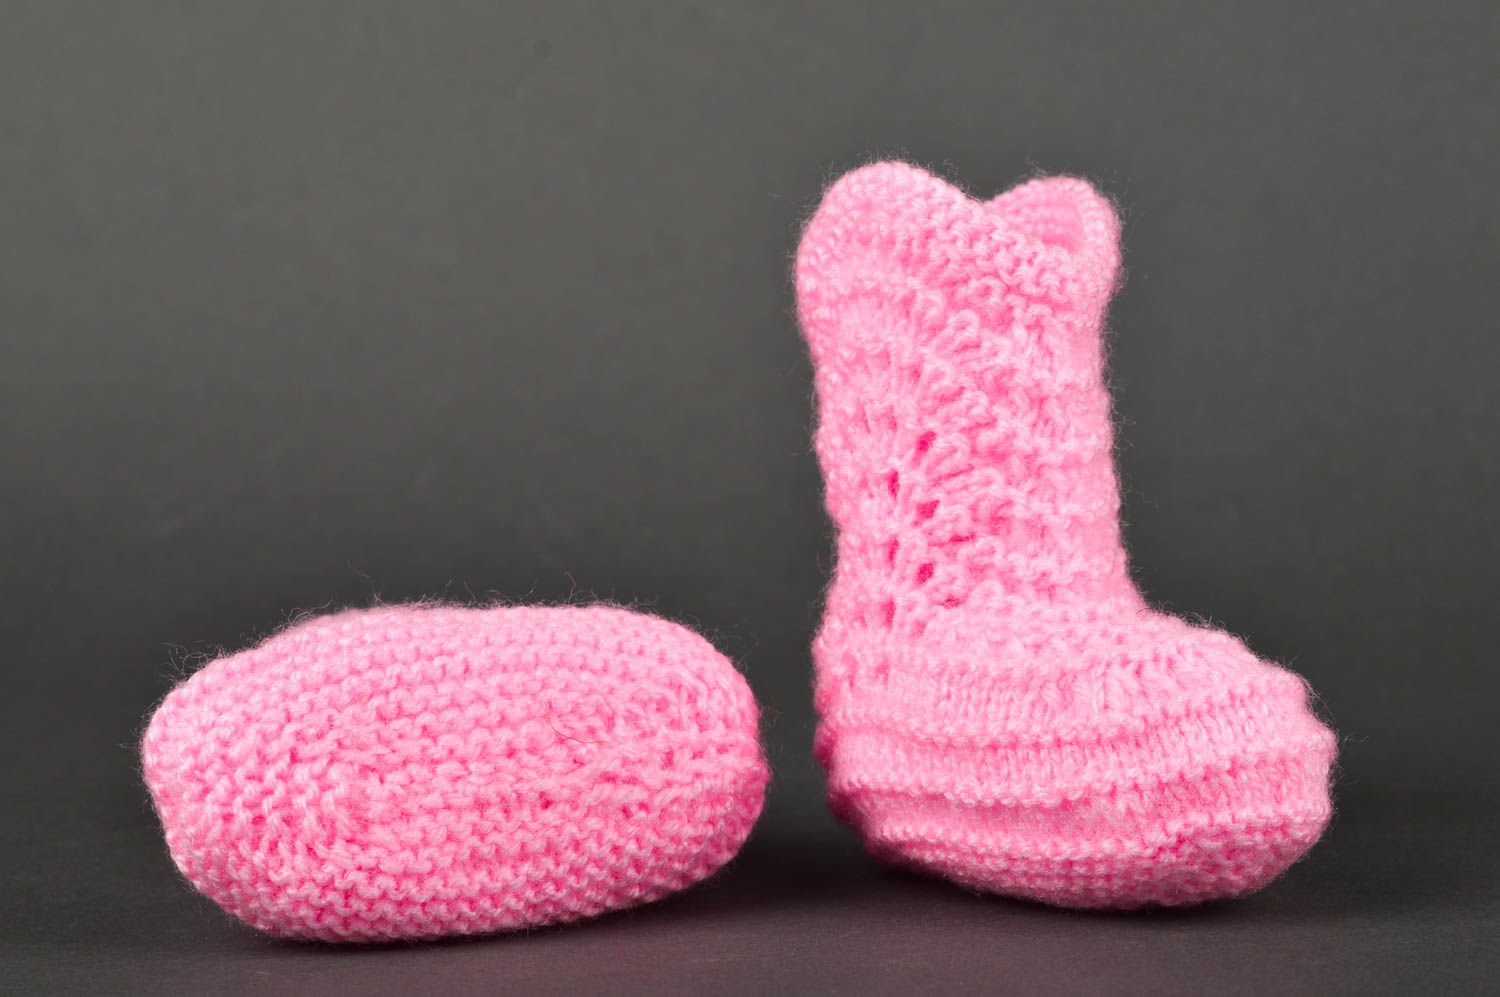 Beautiful handmade crochet baby booties fashion accessories for kids gift ideas photo 3